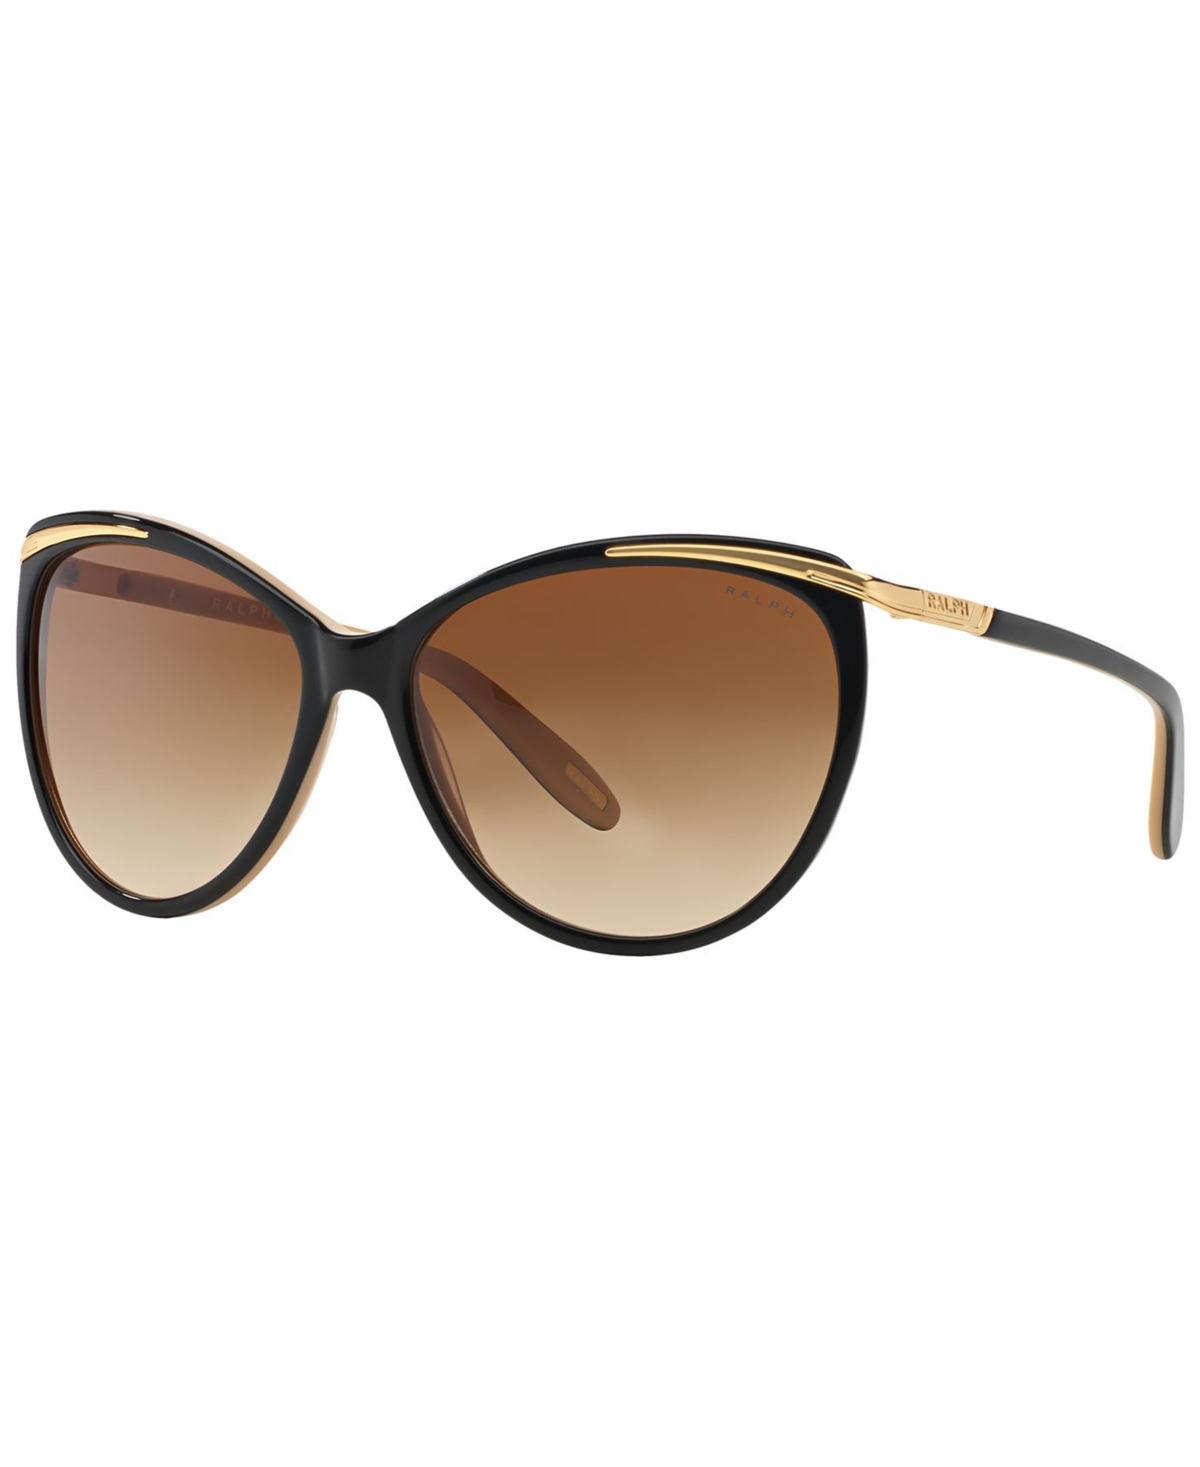 Ralph Women's Sunglasses, RA5150 - BLACK/NUDE / BROWN GRADIENT